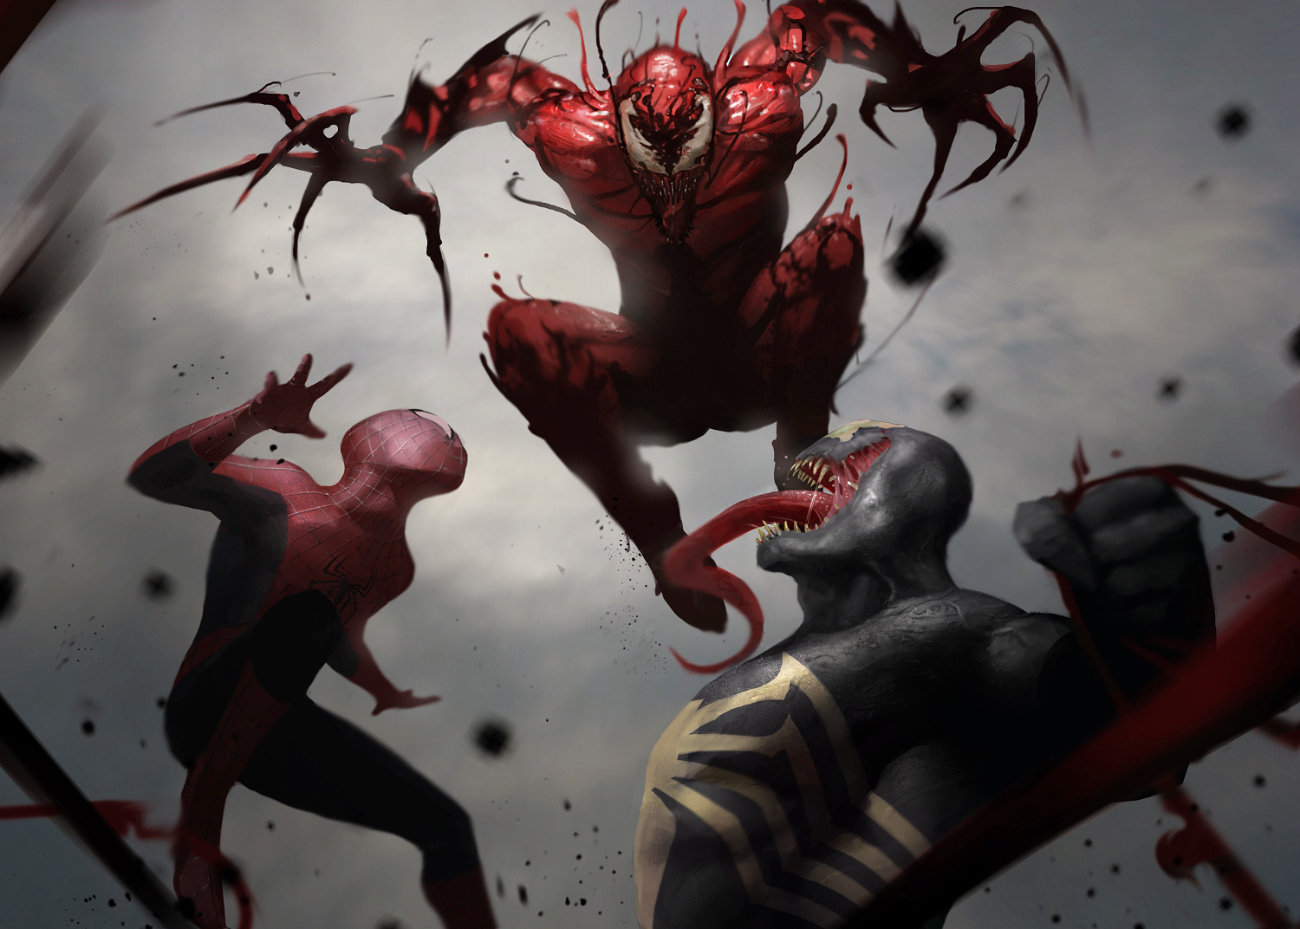 Symbiote brawl!